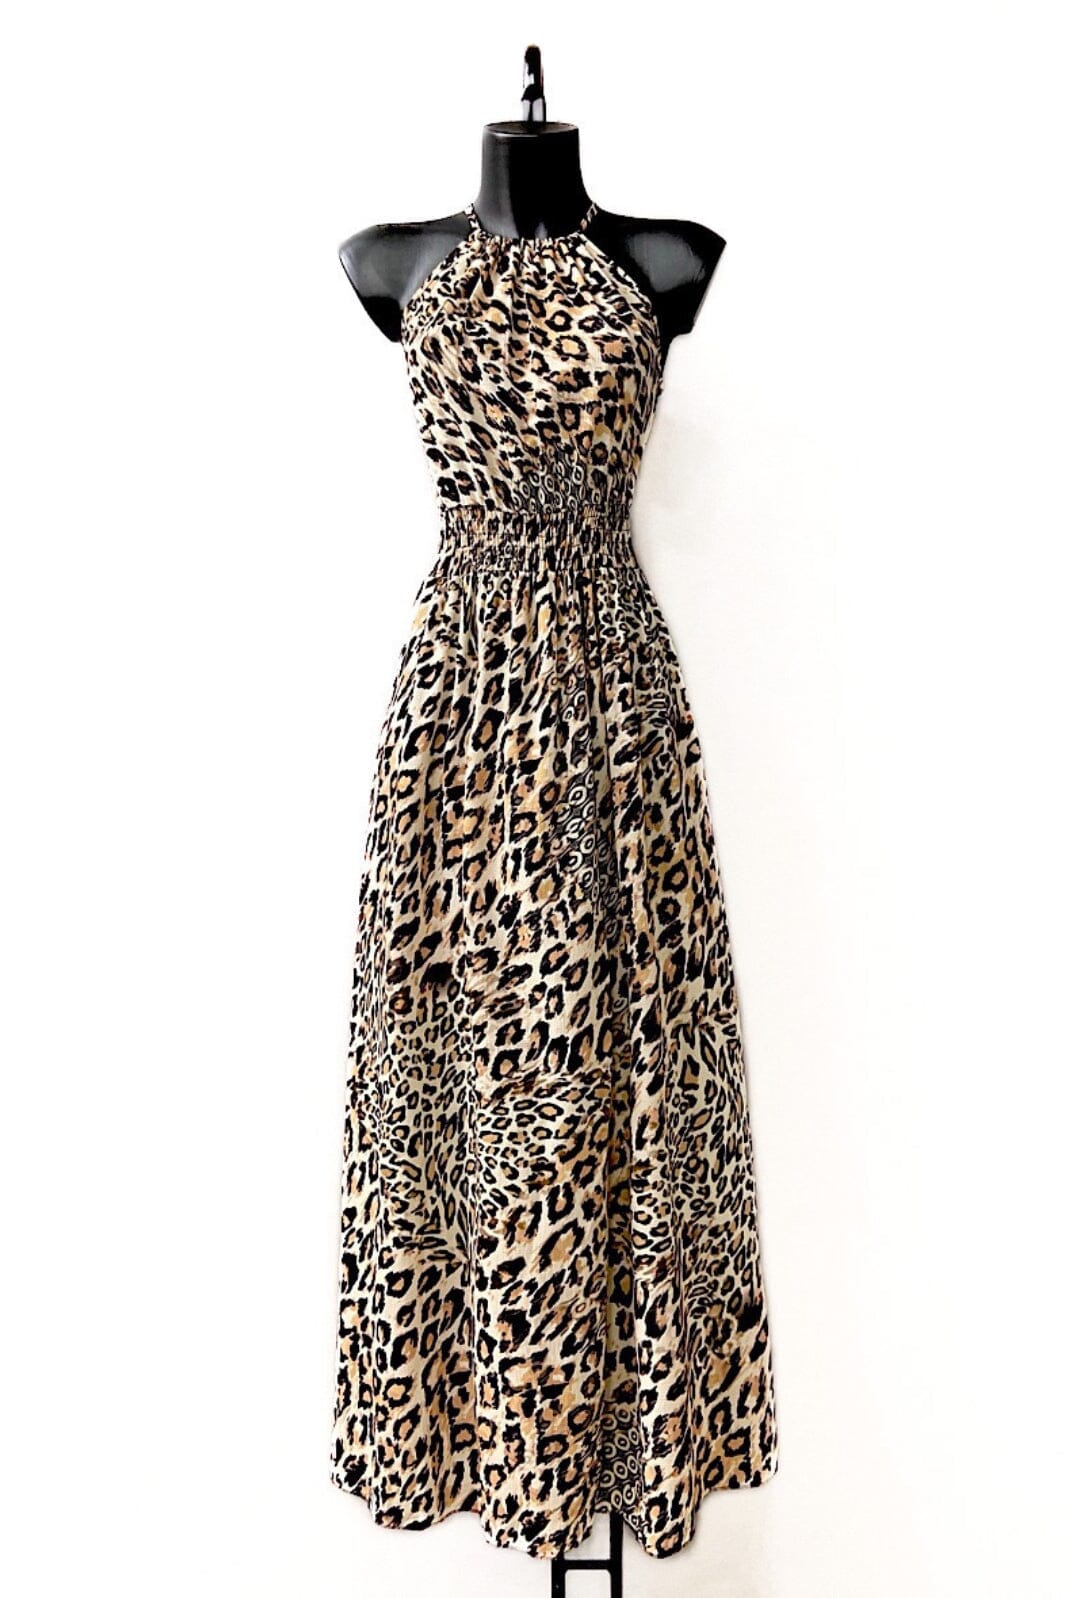 A-bee - Carina dress GL_9229 Leopard - Black Kjoler 